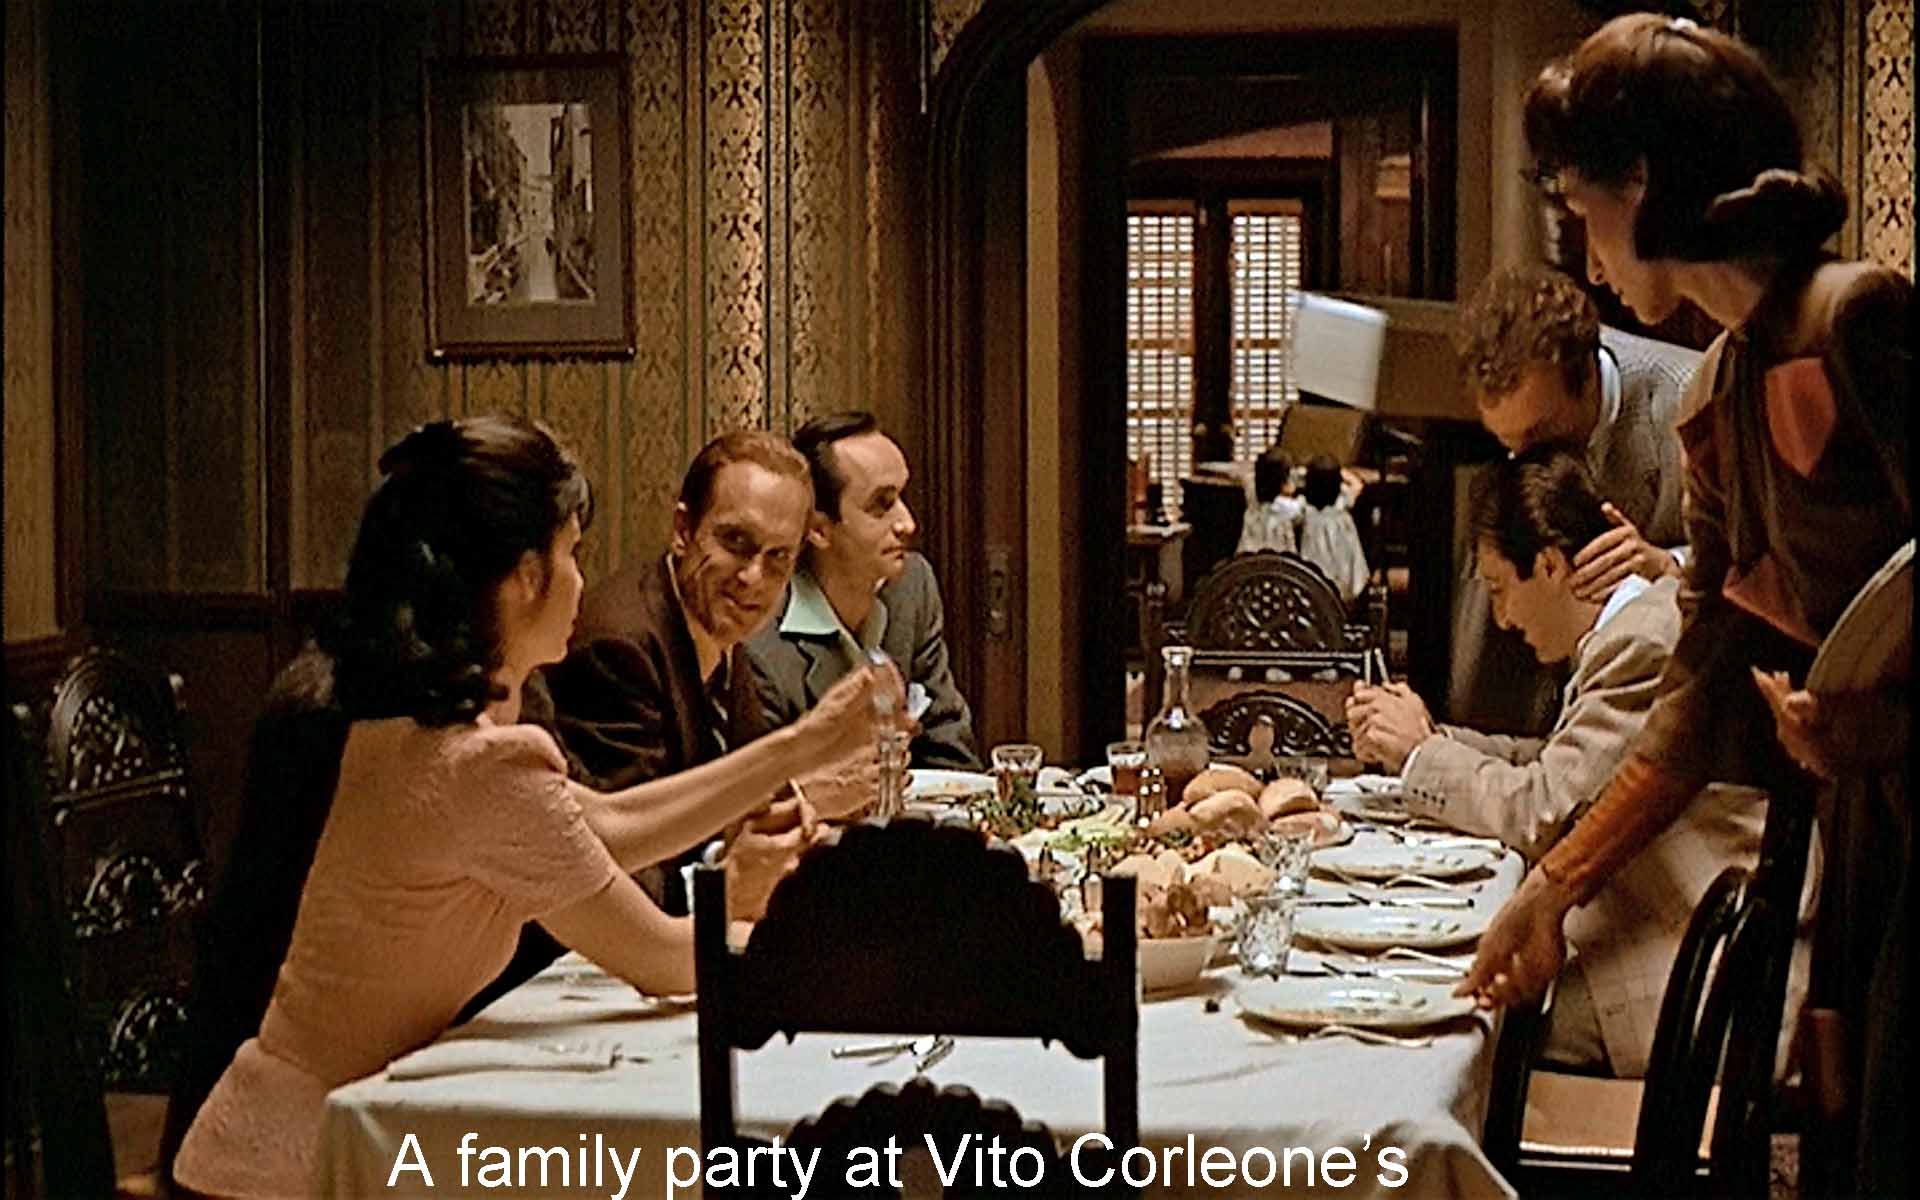 A family party at Vito Corleone's